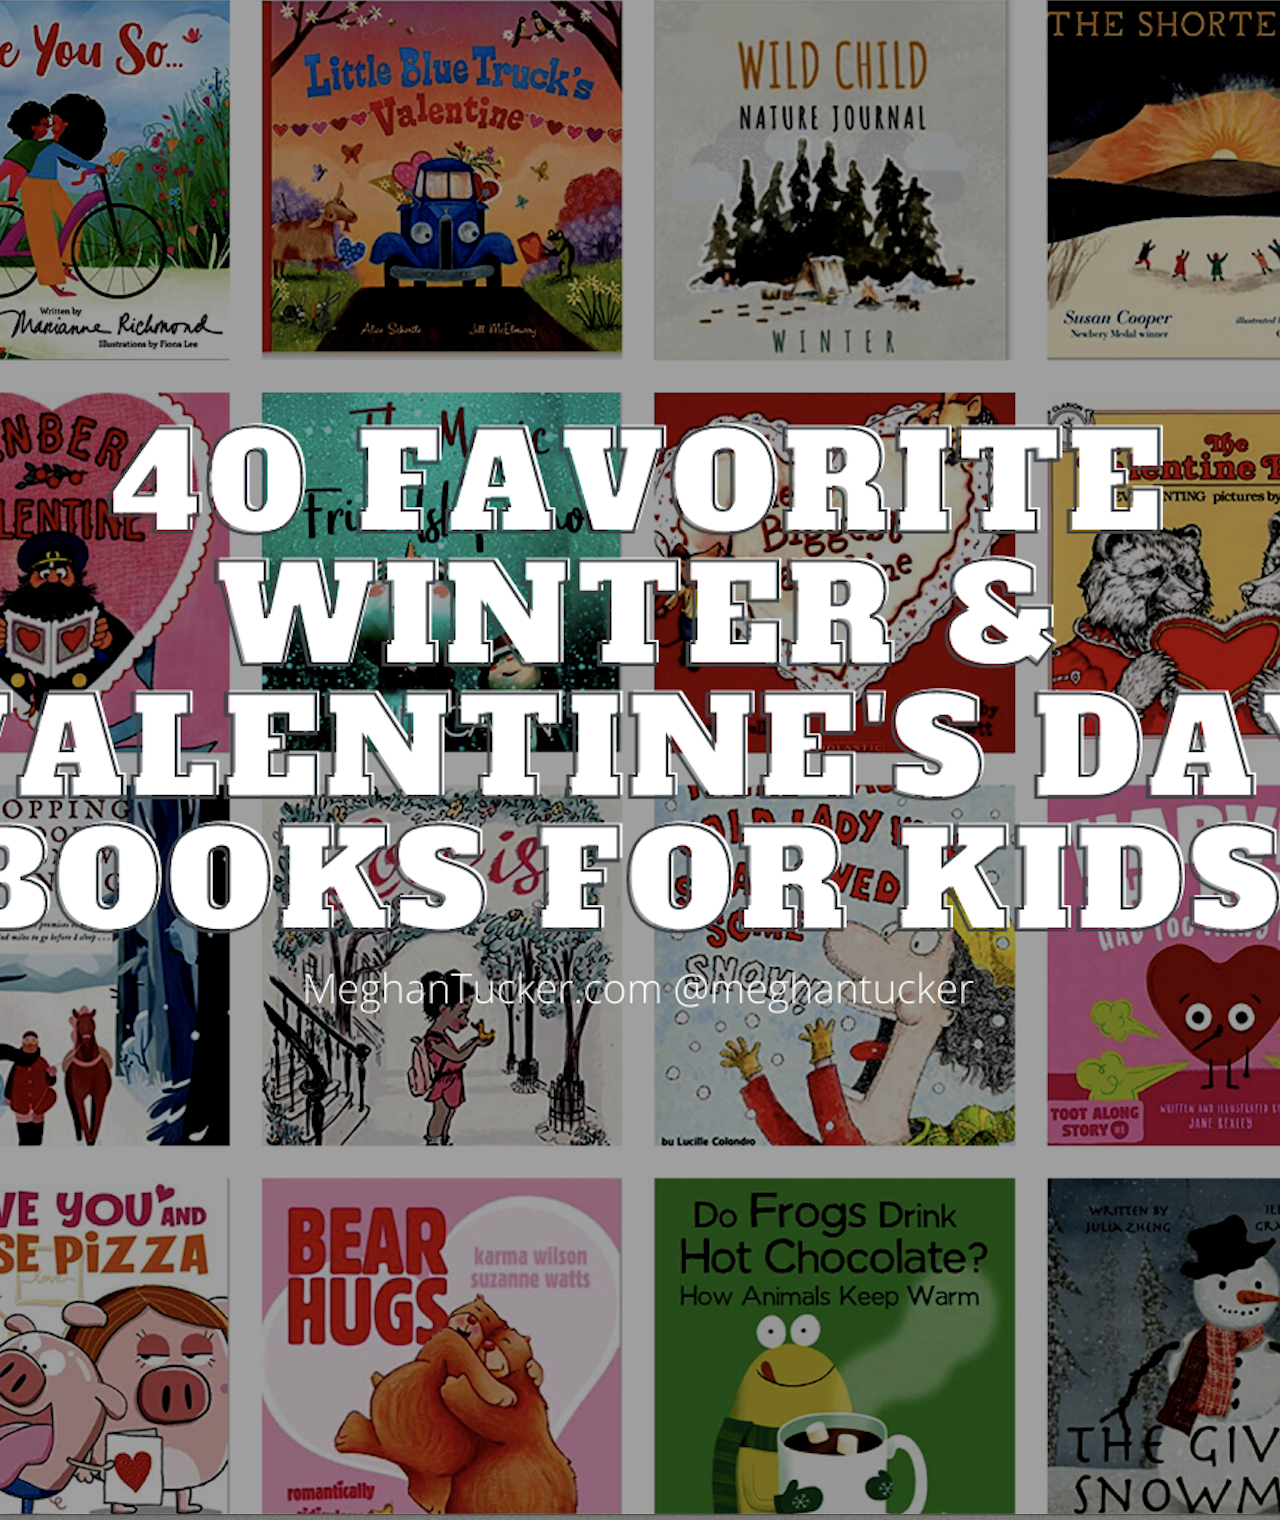 40 Favorite Winter & Valentine’s Day Books For Kids